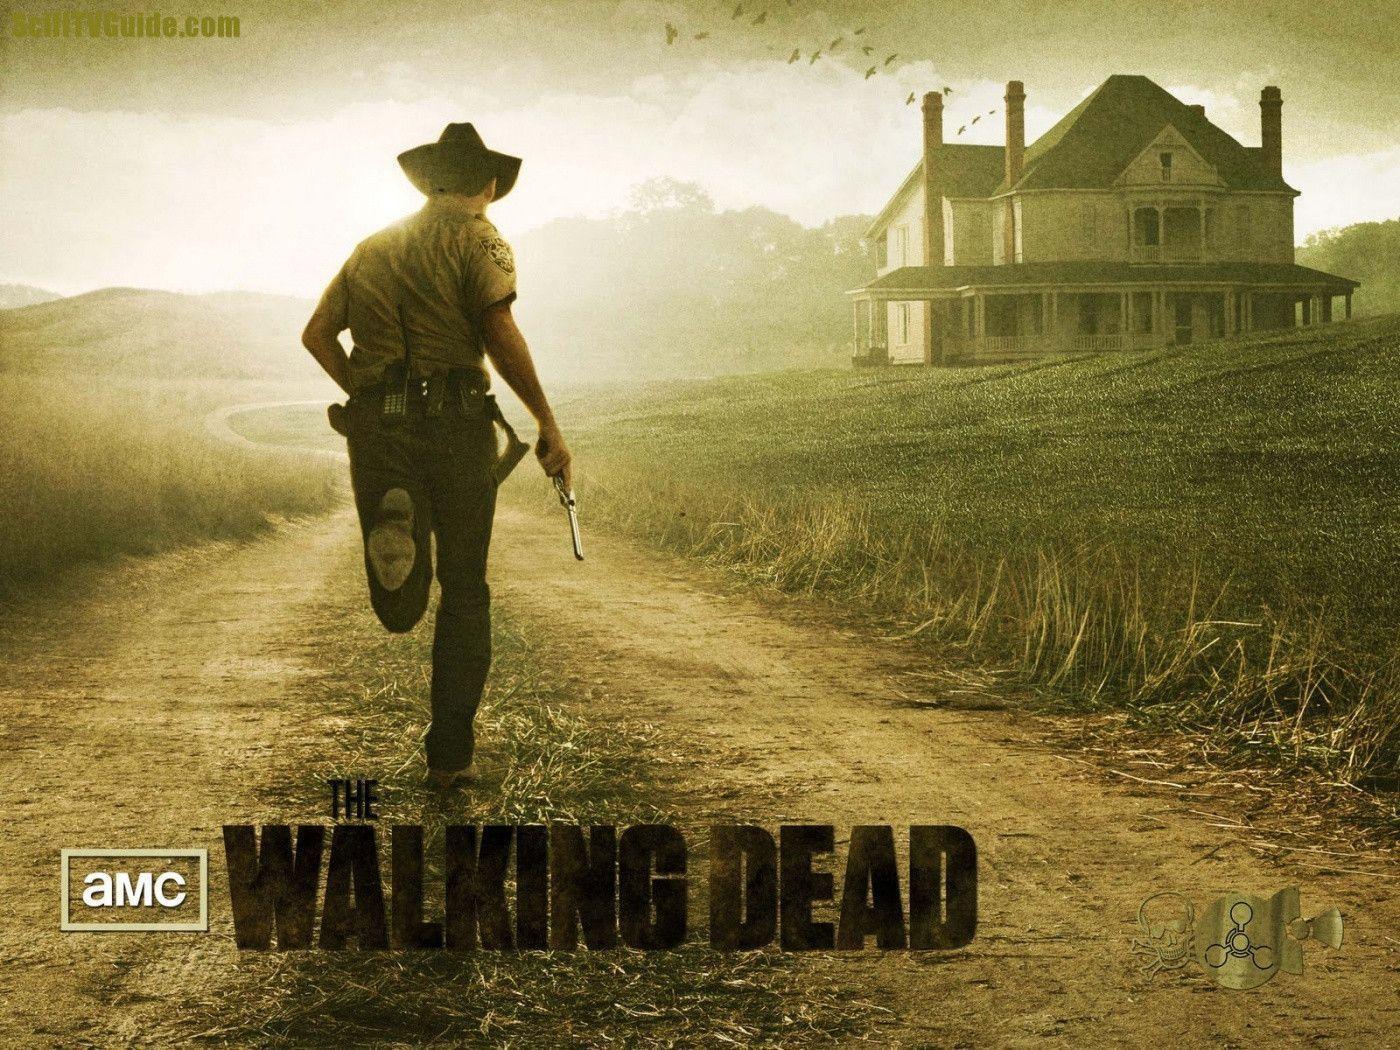 The Walking Dead Wallpapers HD 17 26774 Image HD Wallpapers